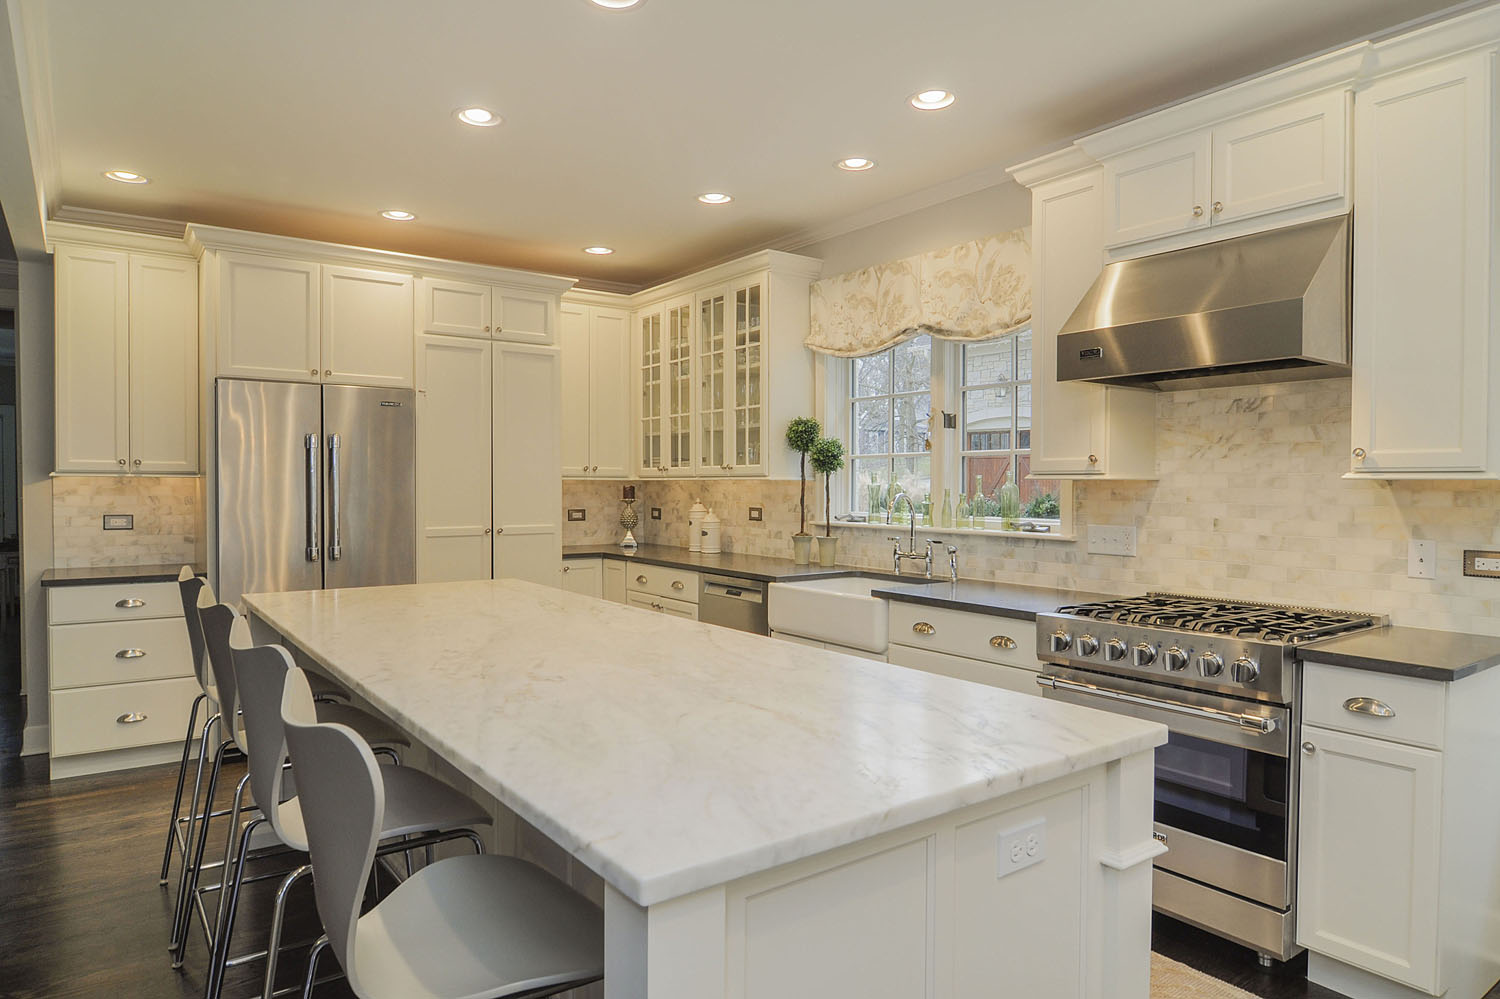 Ben & Ellen's Kitchen Remodel Pictures | Home Remodeling ...